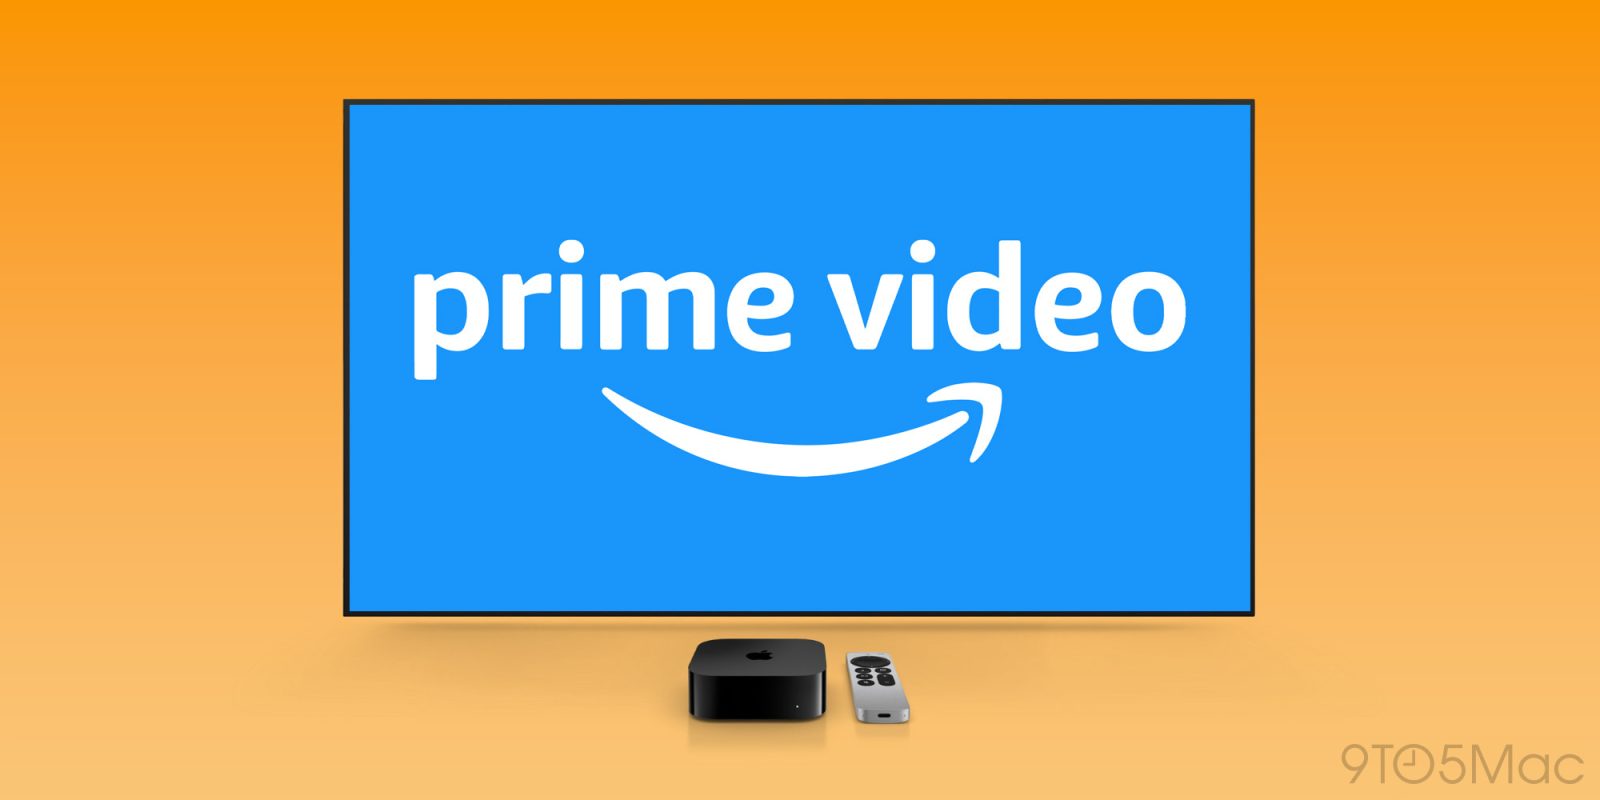 Prime Video logo on TV